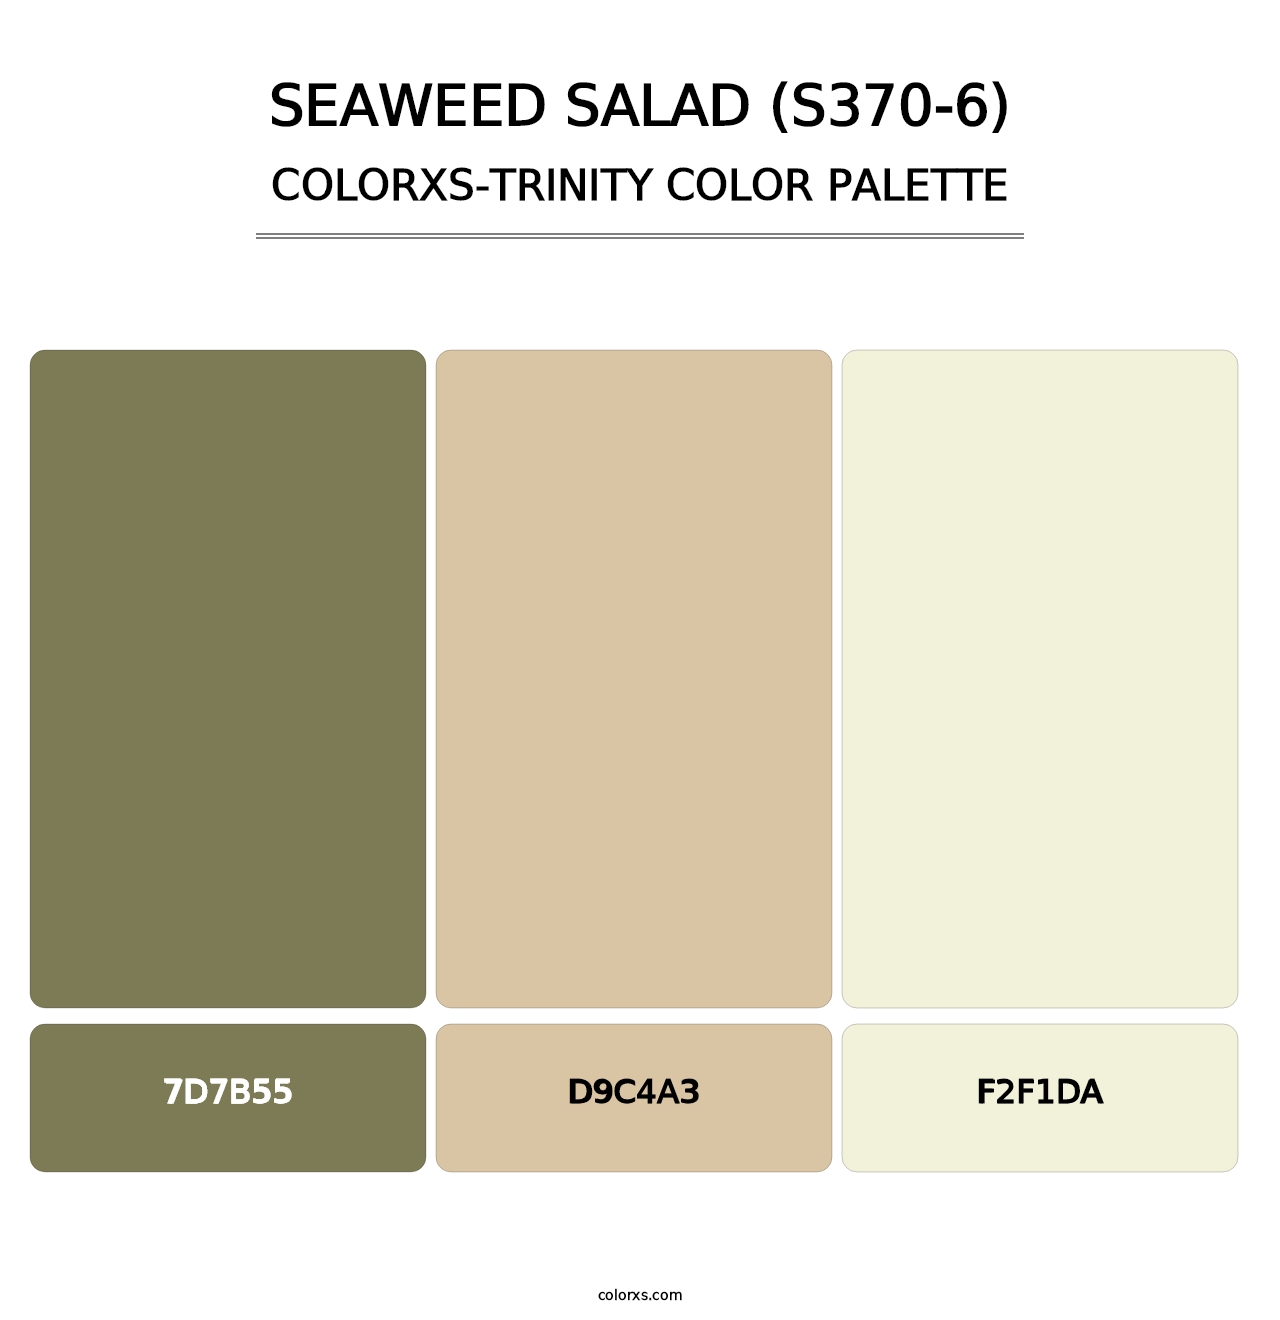 Seaweed Salad (S370-6) - Colorxs Trinity Palette